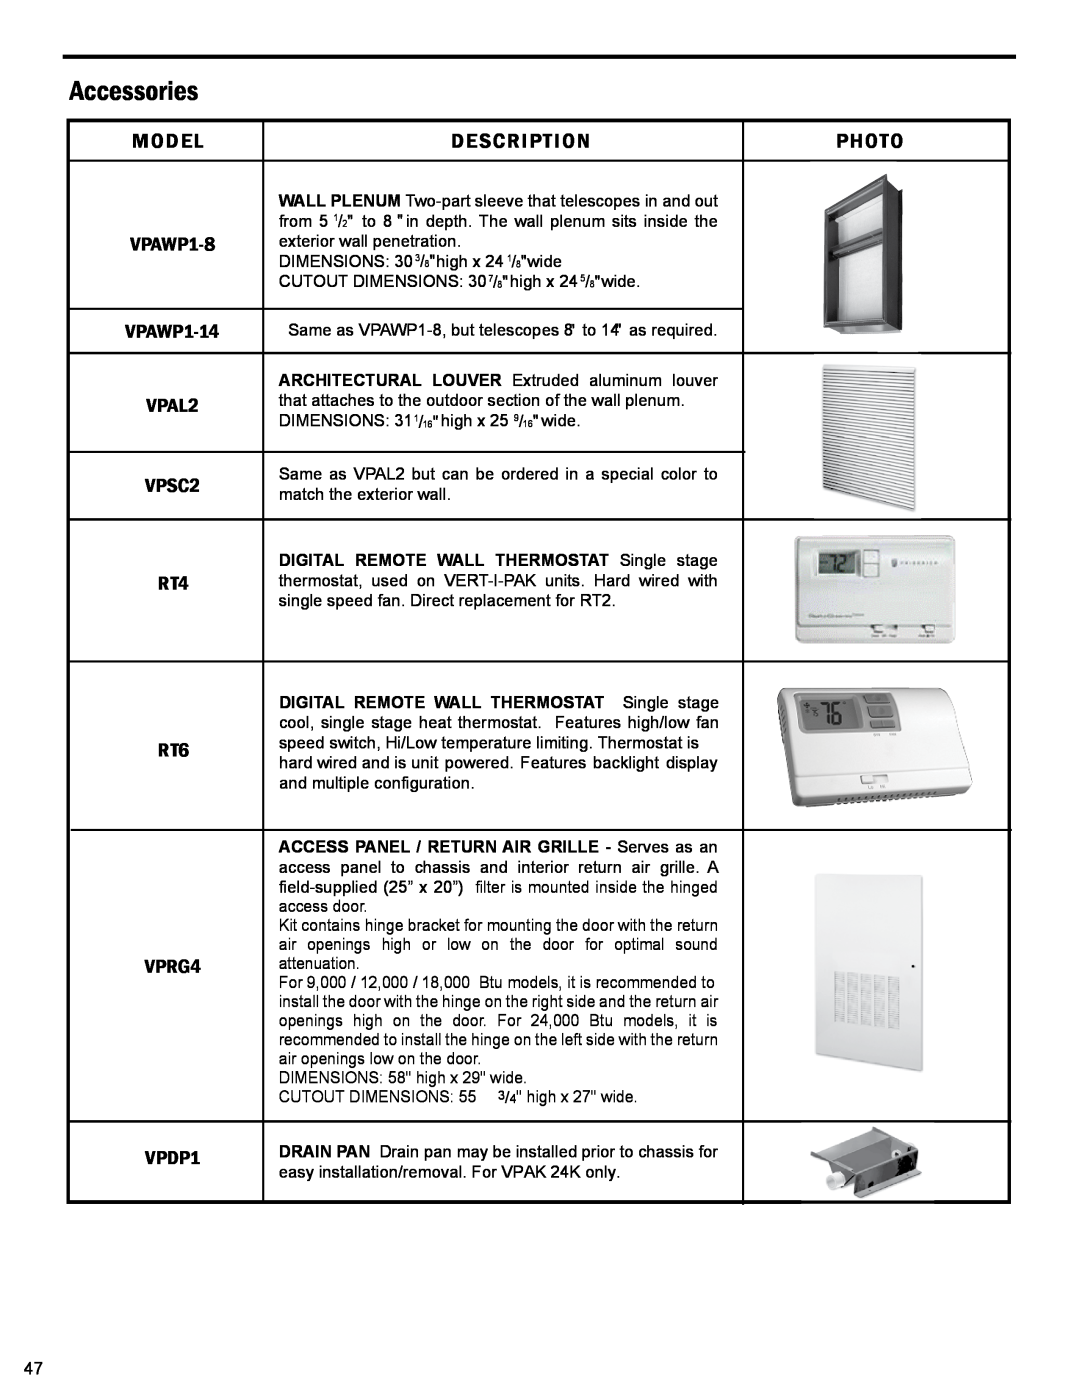 Friedrich R410A manual Accessories, VPAWP1-8, VPAWP1-14, VPAL2, VPSC2, VPRG4, VPDP1, Model, Description, Photo 